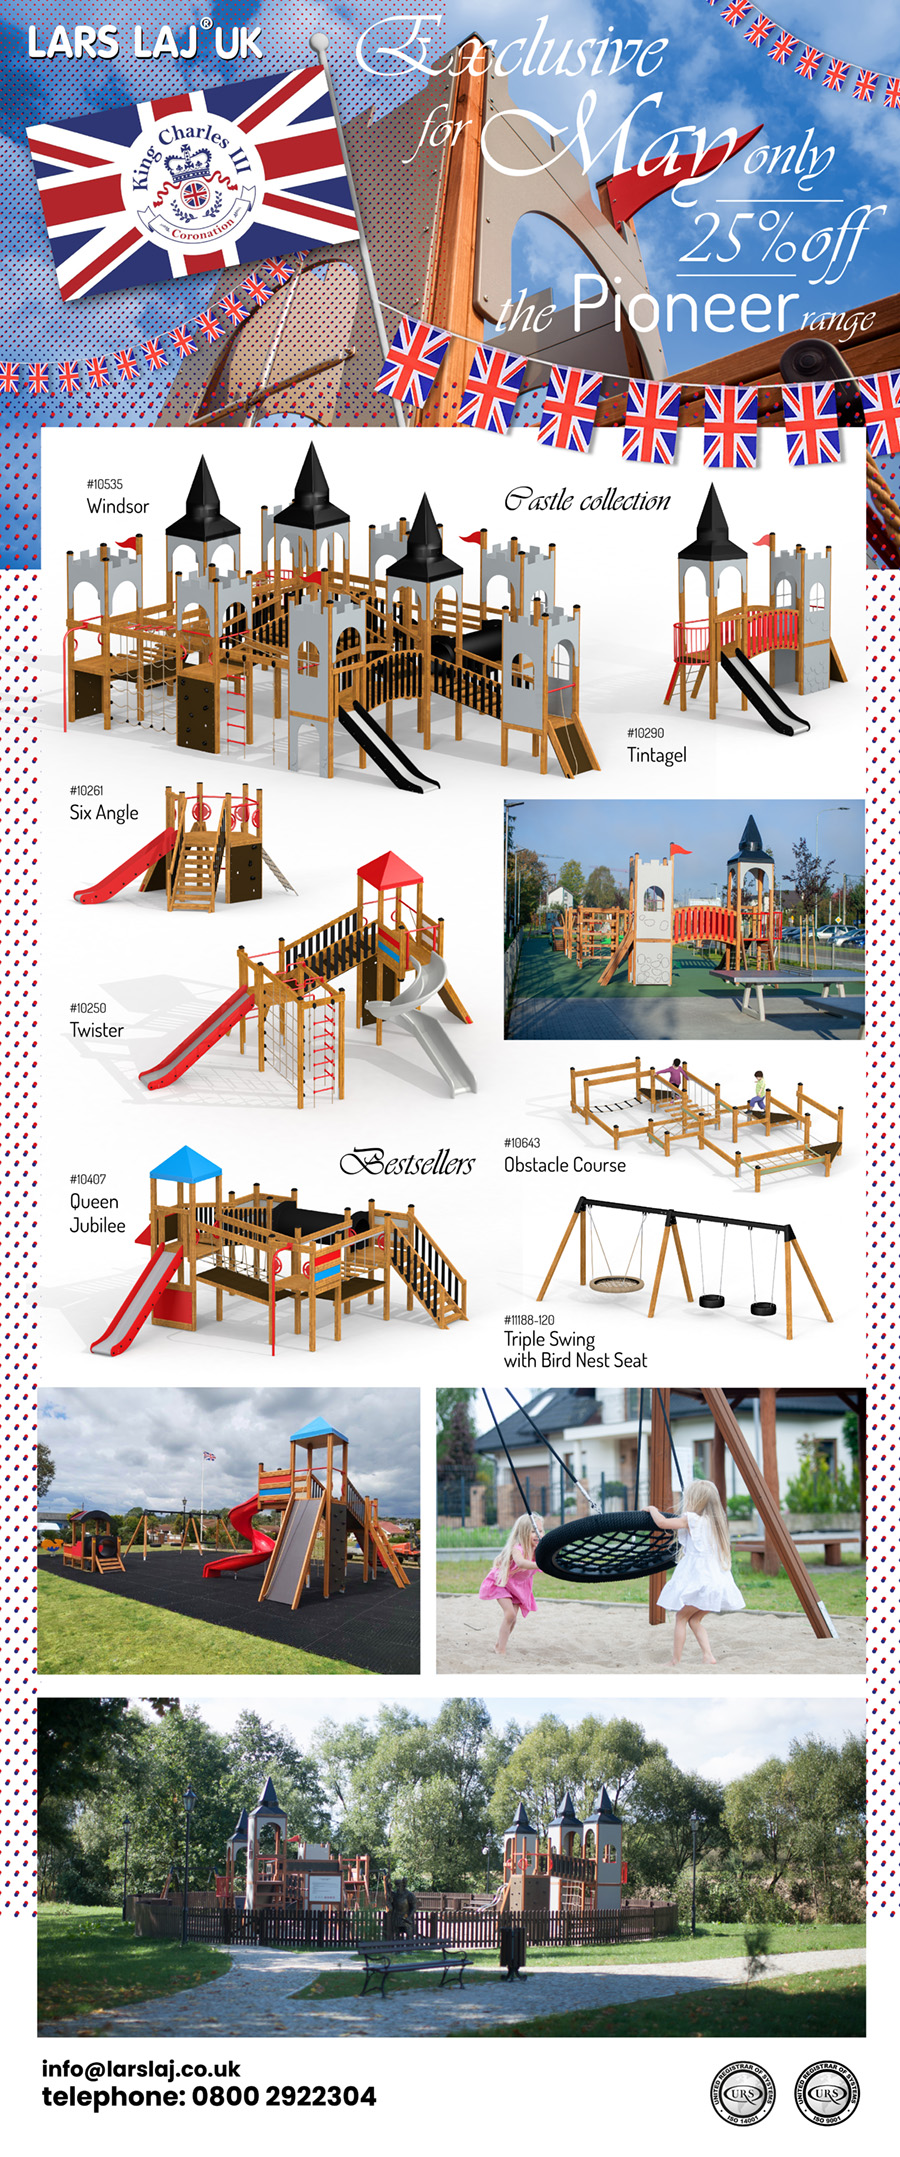 Lars Laj UK's new playground equipment for 2023